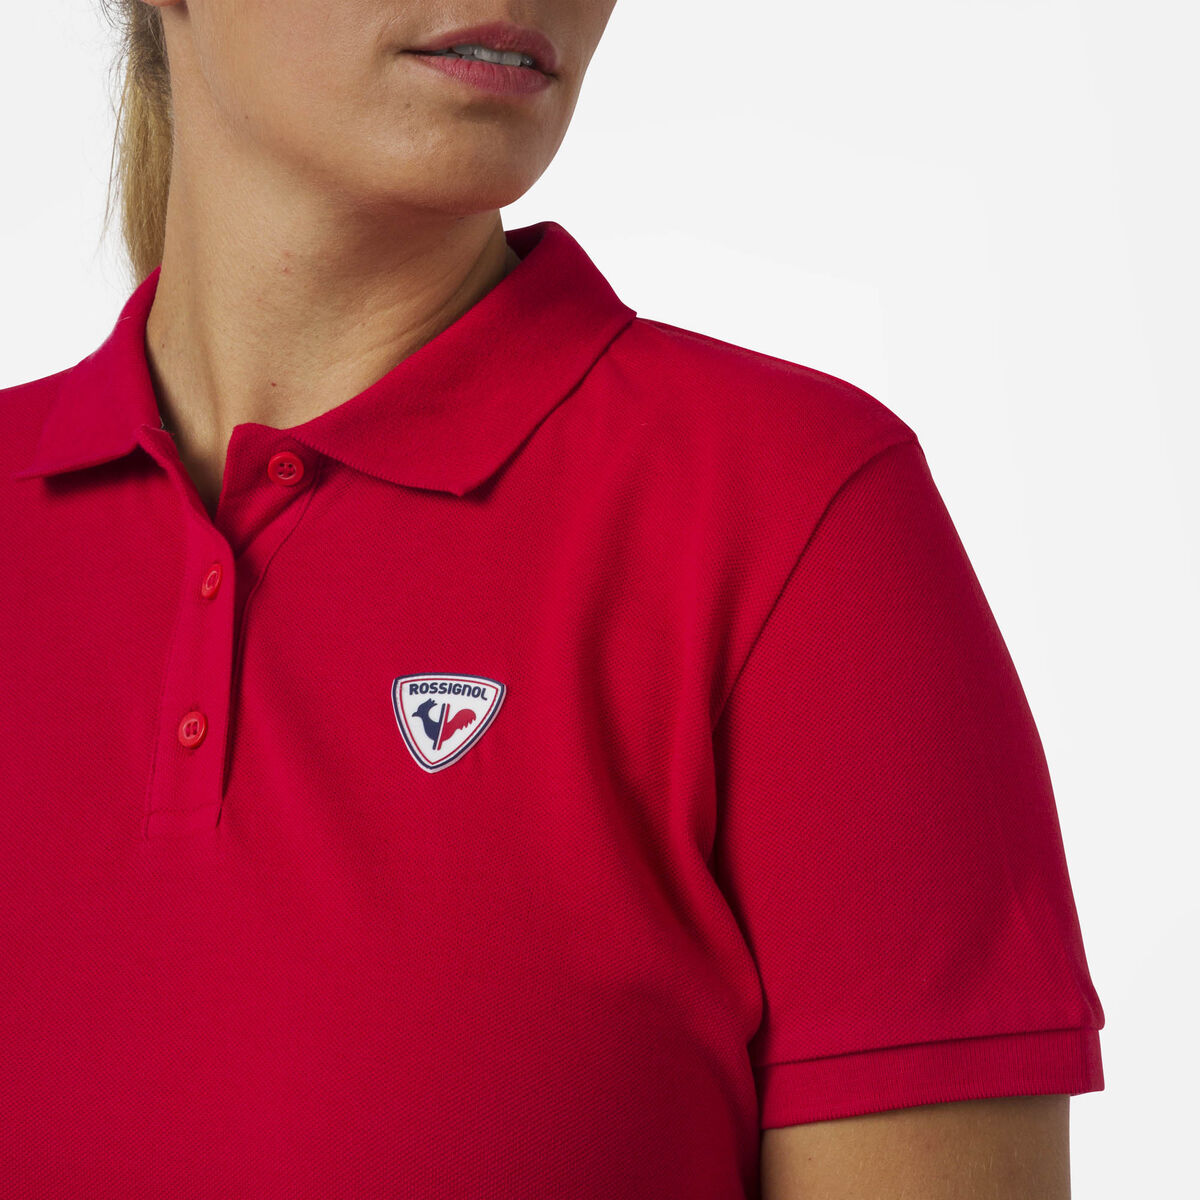 Rossignol Women's logo polo red